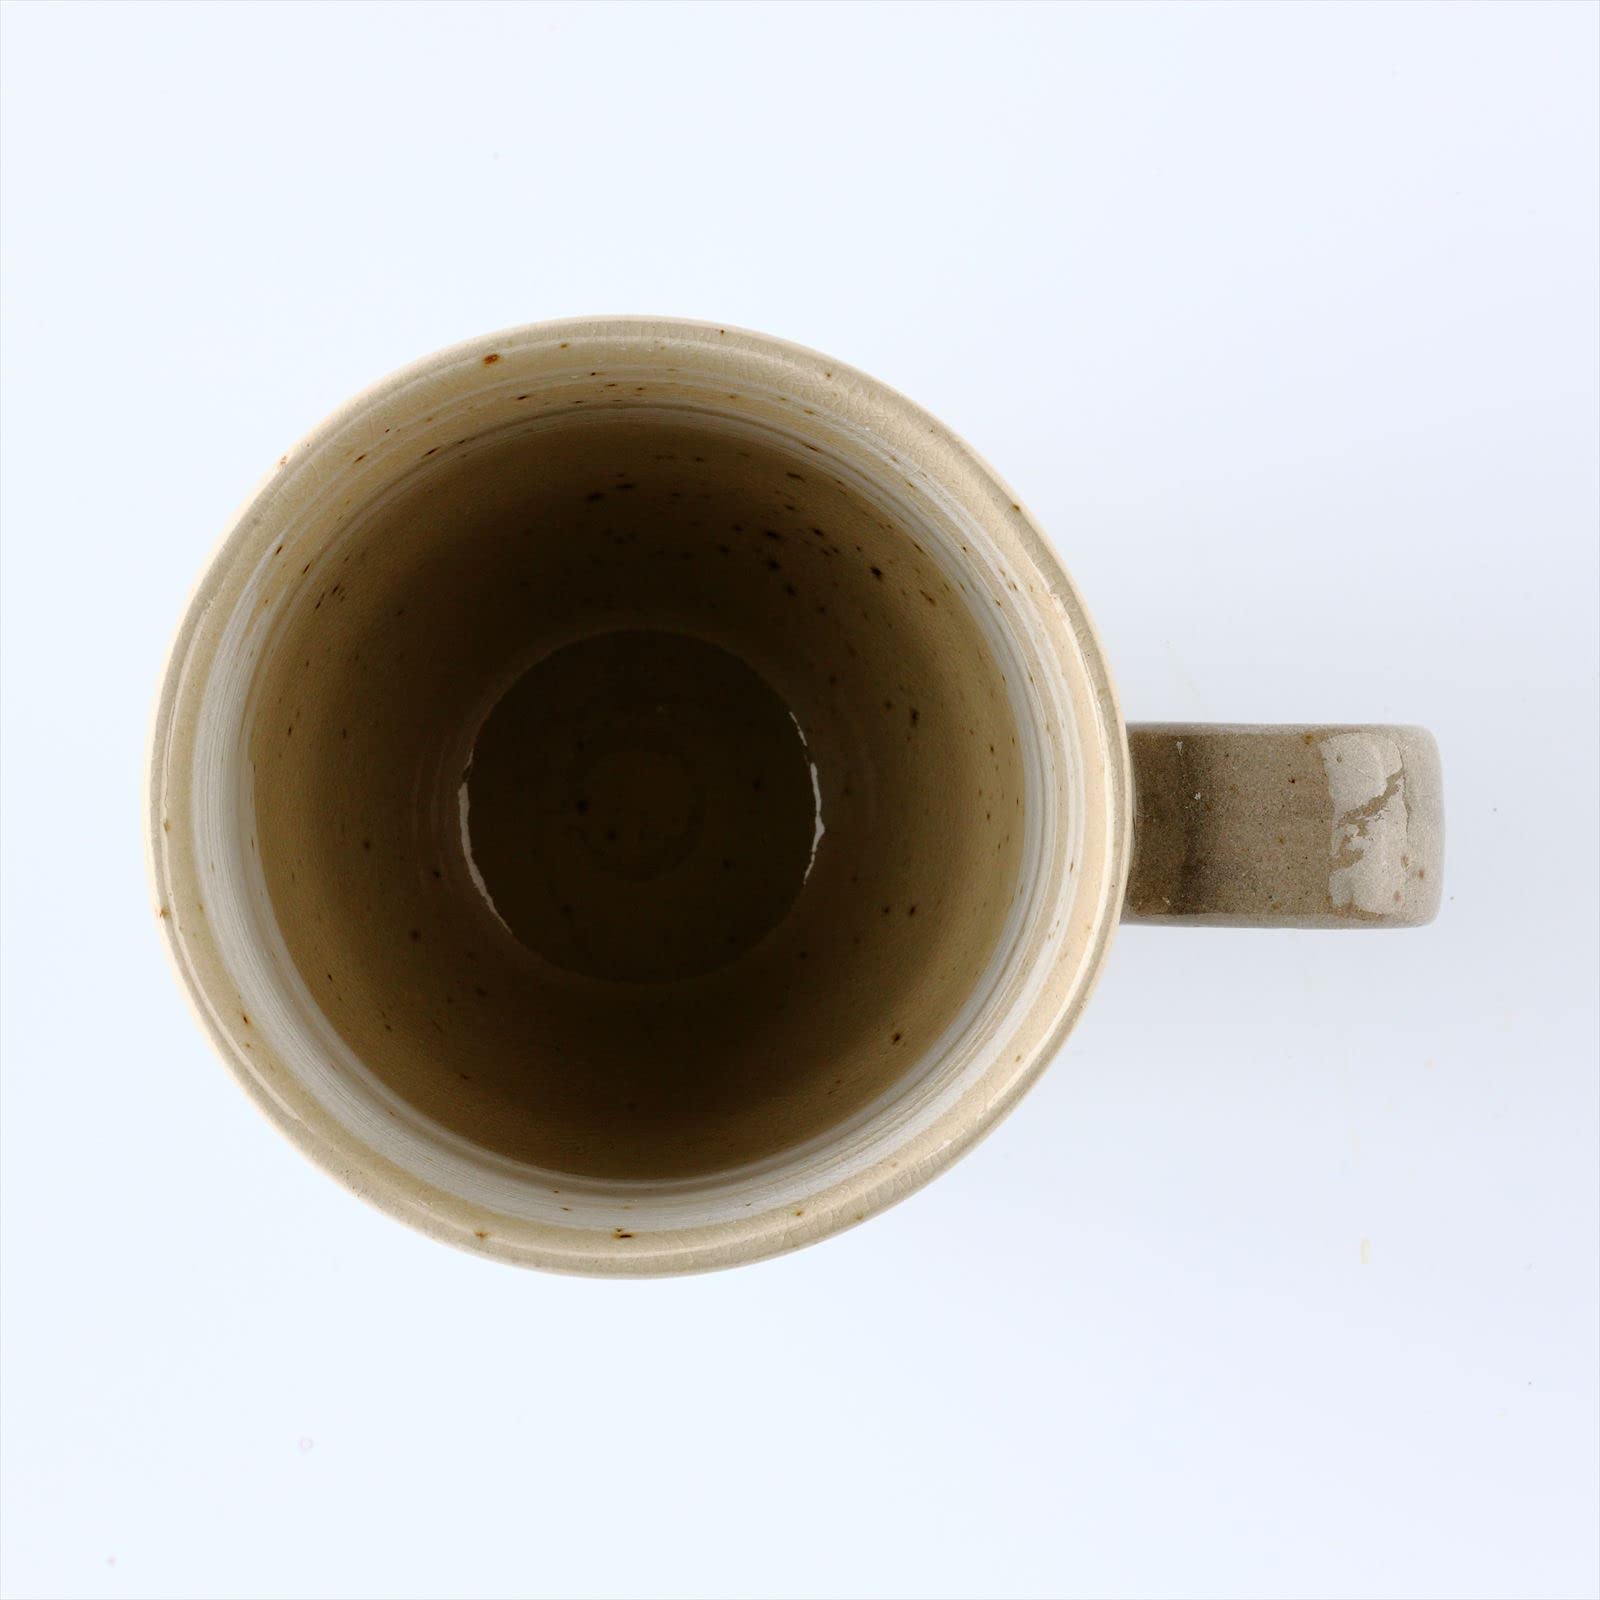 Japanese Mino Yaki(Ware) Ceramic Coffee Mugs Set of 2, Japanese Poem Owl Design, Gray 8.8 fl oz, Handmade Tea Cups, for Tea Ceremony, Green Tea, Matcha Tea, Japanese Cute Gifts